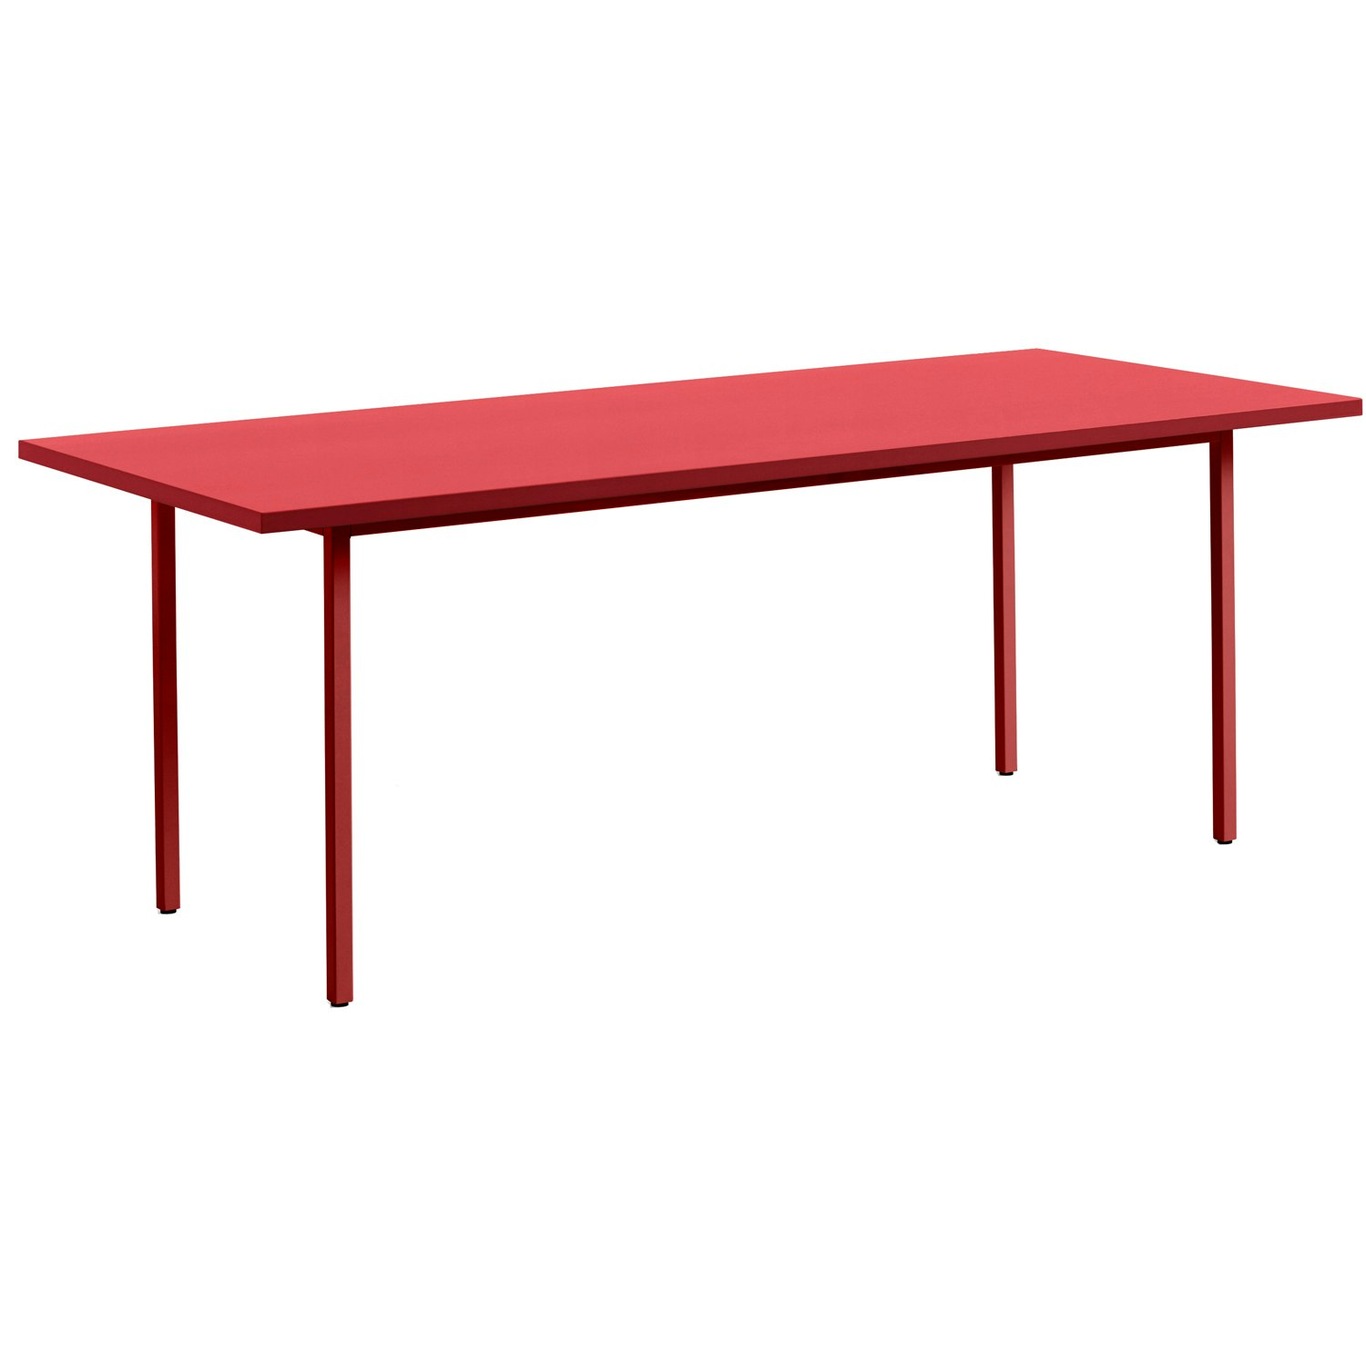 Two-Colour Tisch 200x90 cm, Weinrot / Rot